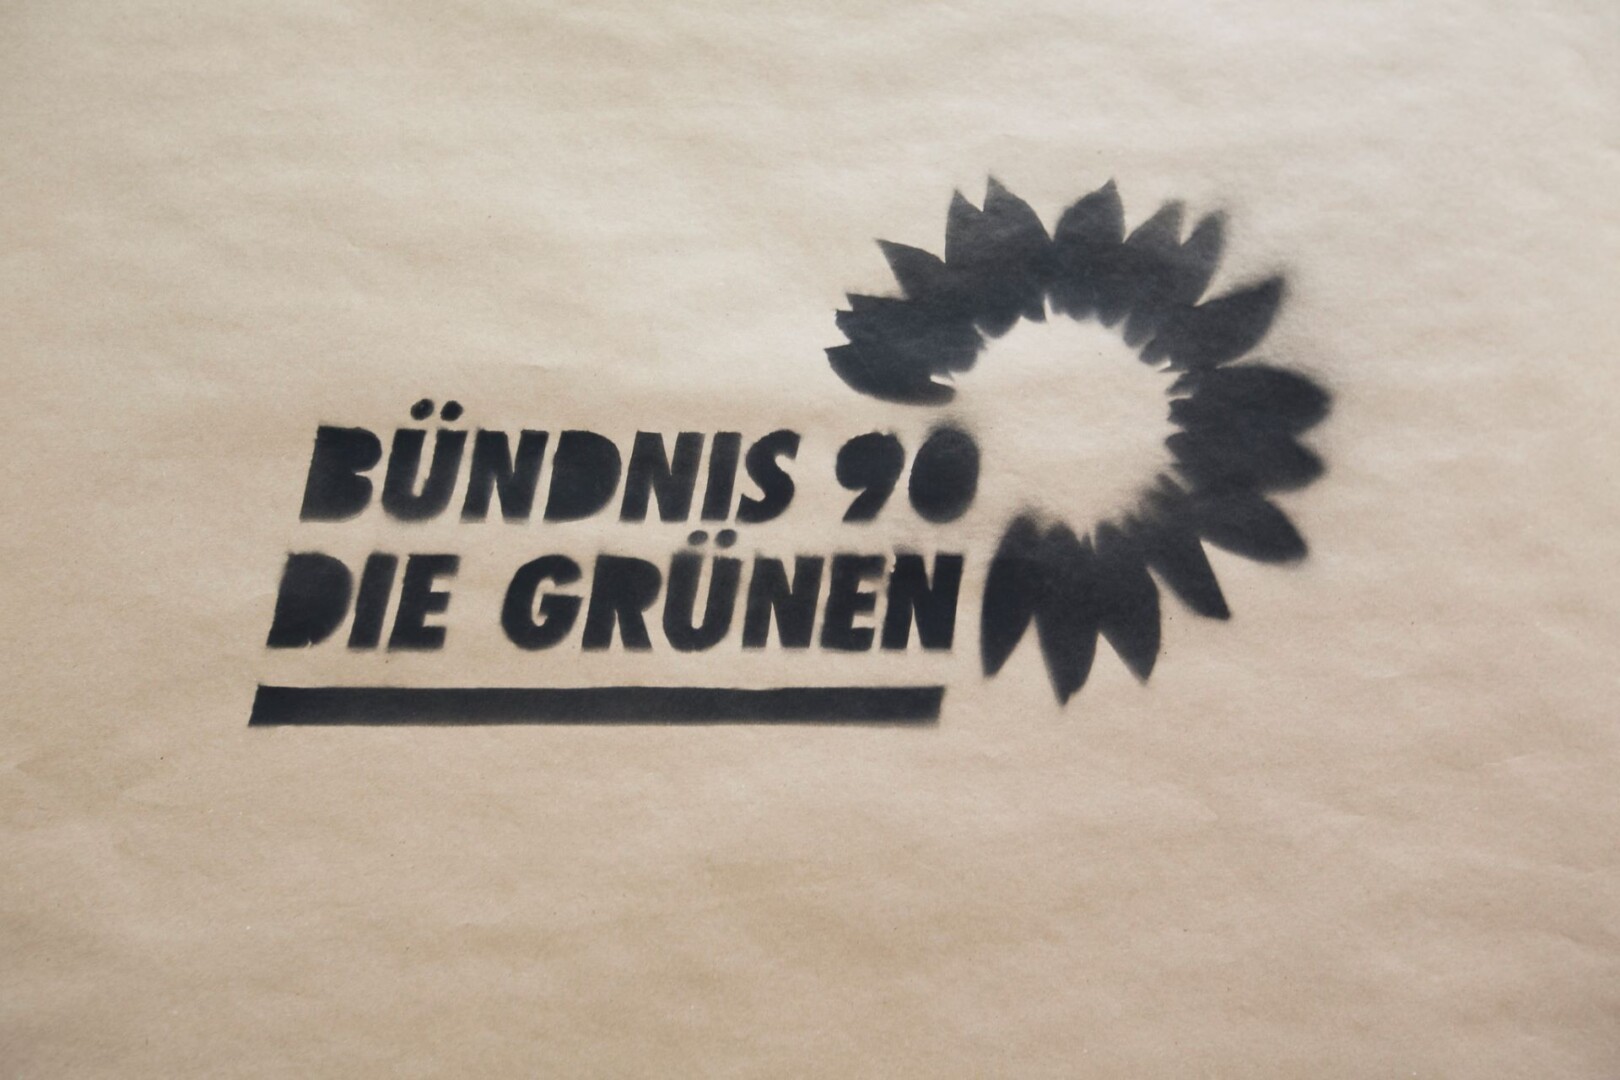 B90 / Die Grünen / Archivbild / Logo BÜNDNIS 90/DIE GRÜNEN by Bündnis 90/Die Grünen Baden-Württemberg is licensed under CC BY-SA 2.0. https://creativecommons.org/licenses/by-sa/2.0/